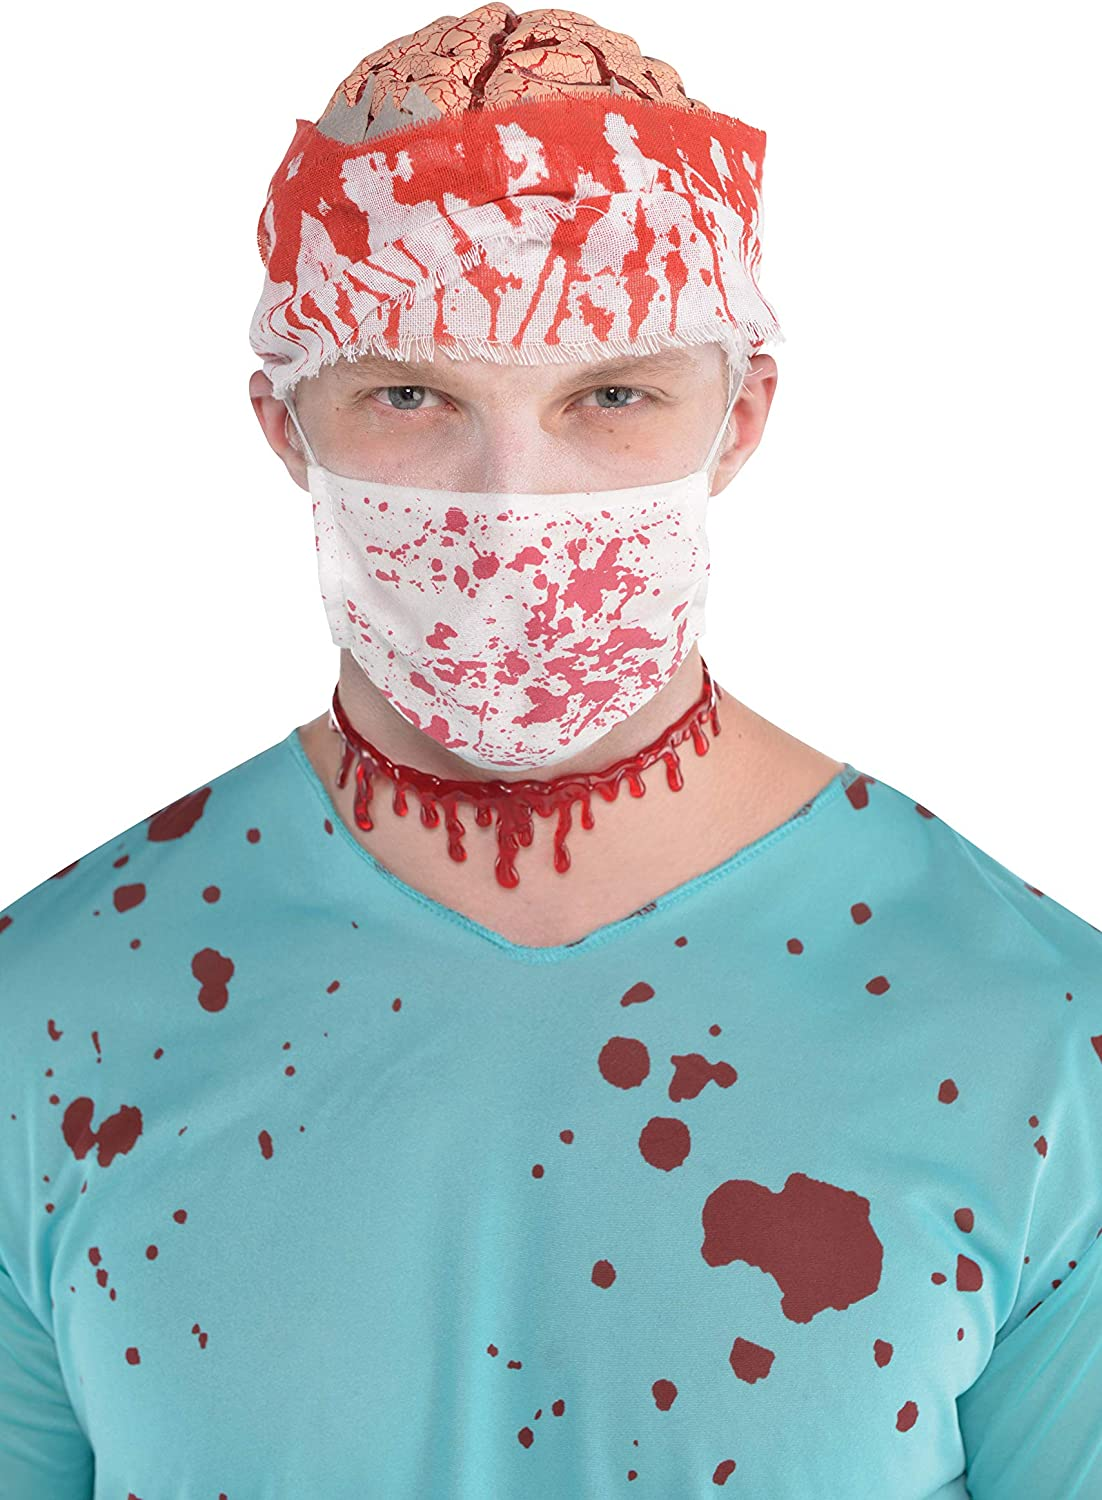 Bloody Halloween Mask @ Amazon + FS $0.84